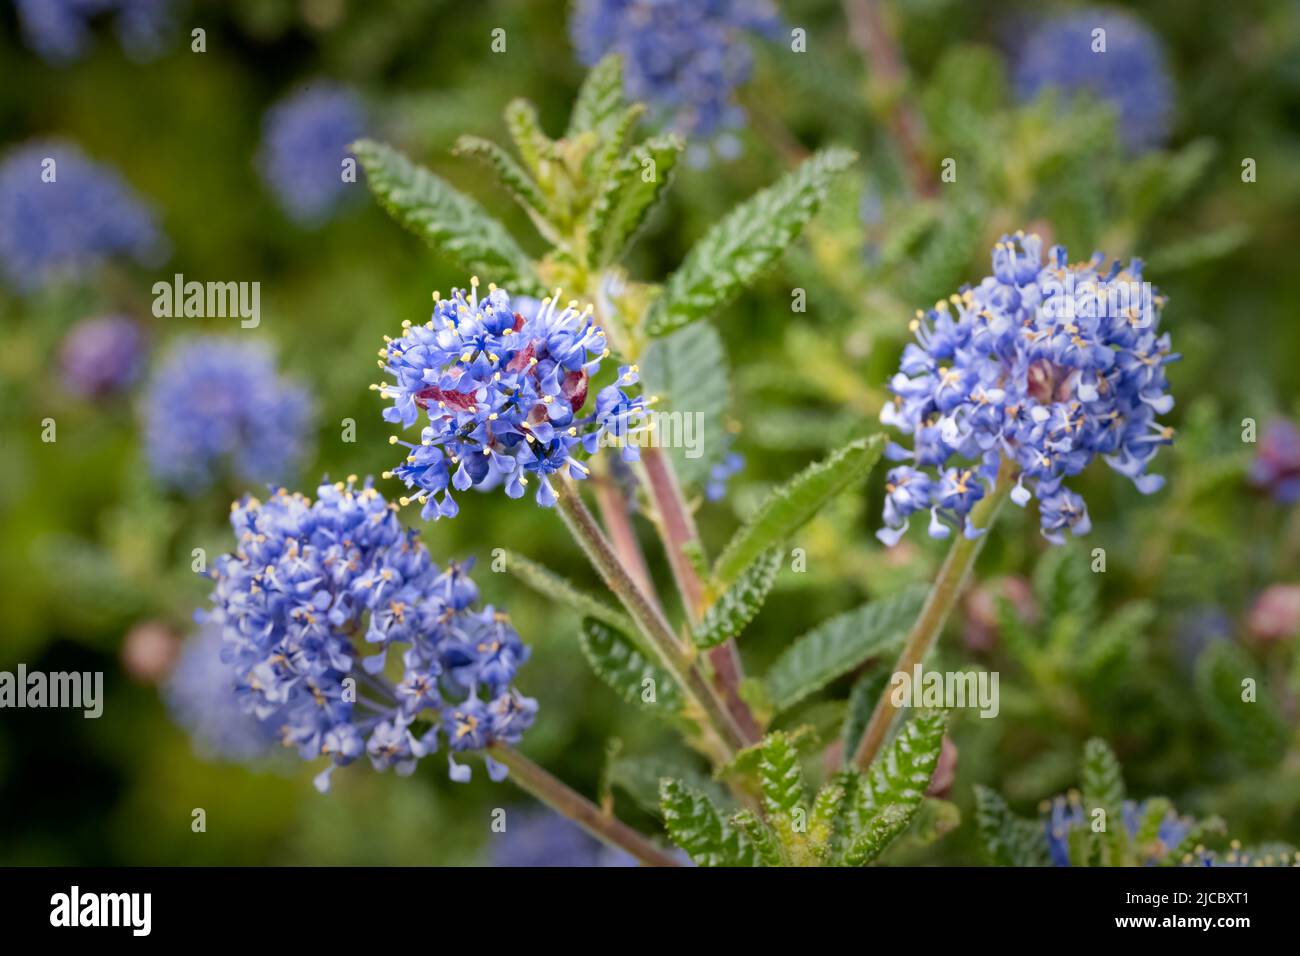 The gorgeous blue flower of a Ceanothus shrub Stock Photo